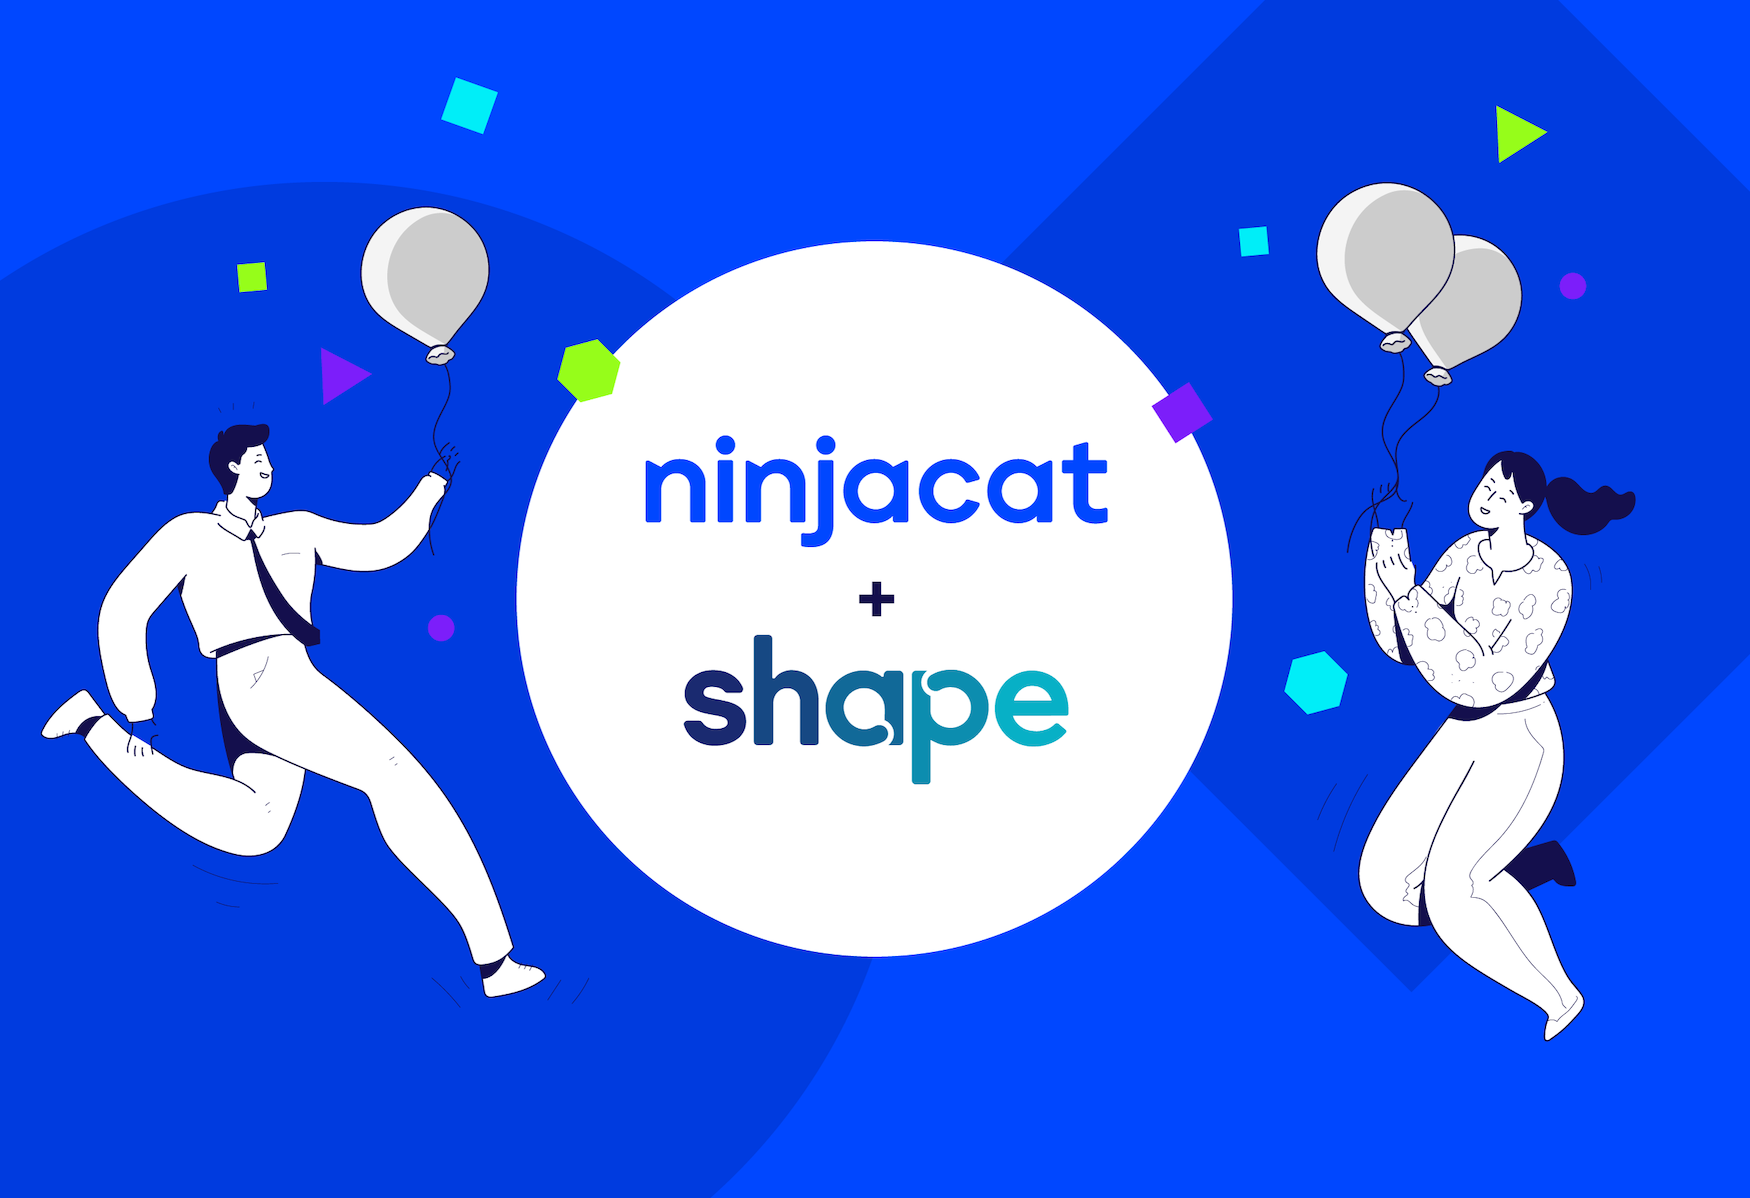 Shape.io has been acquired by NinjaCat